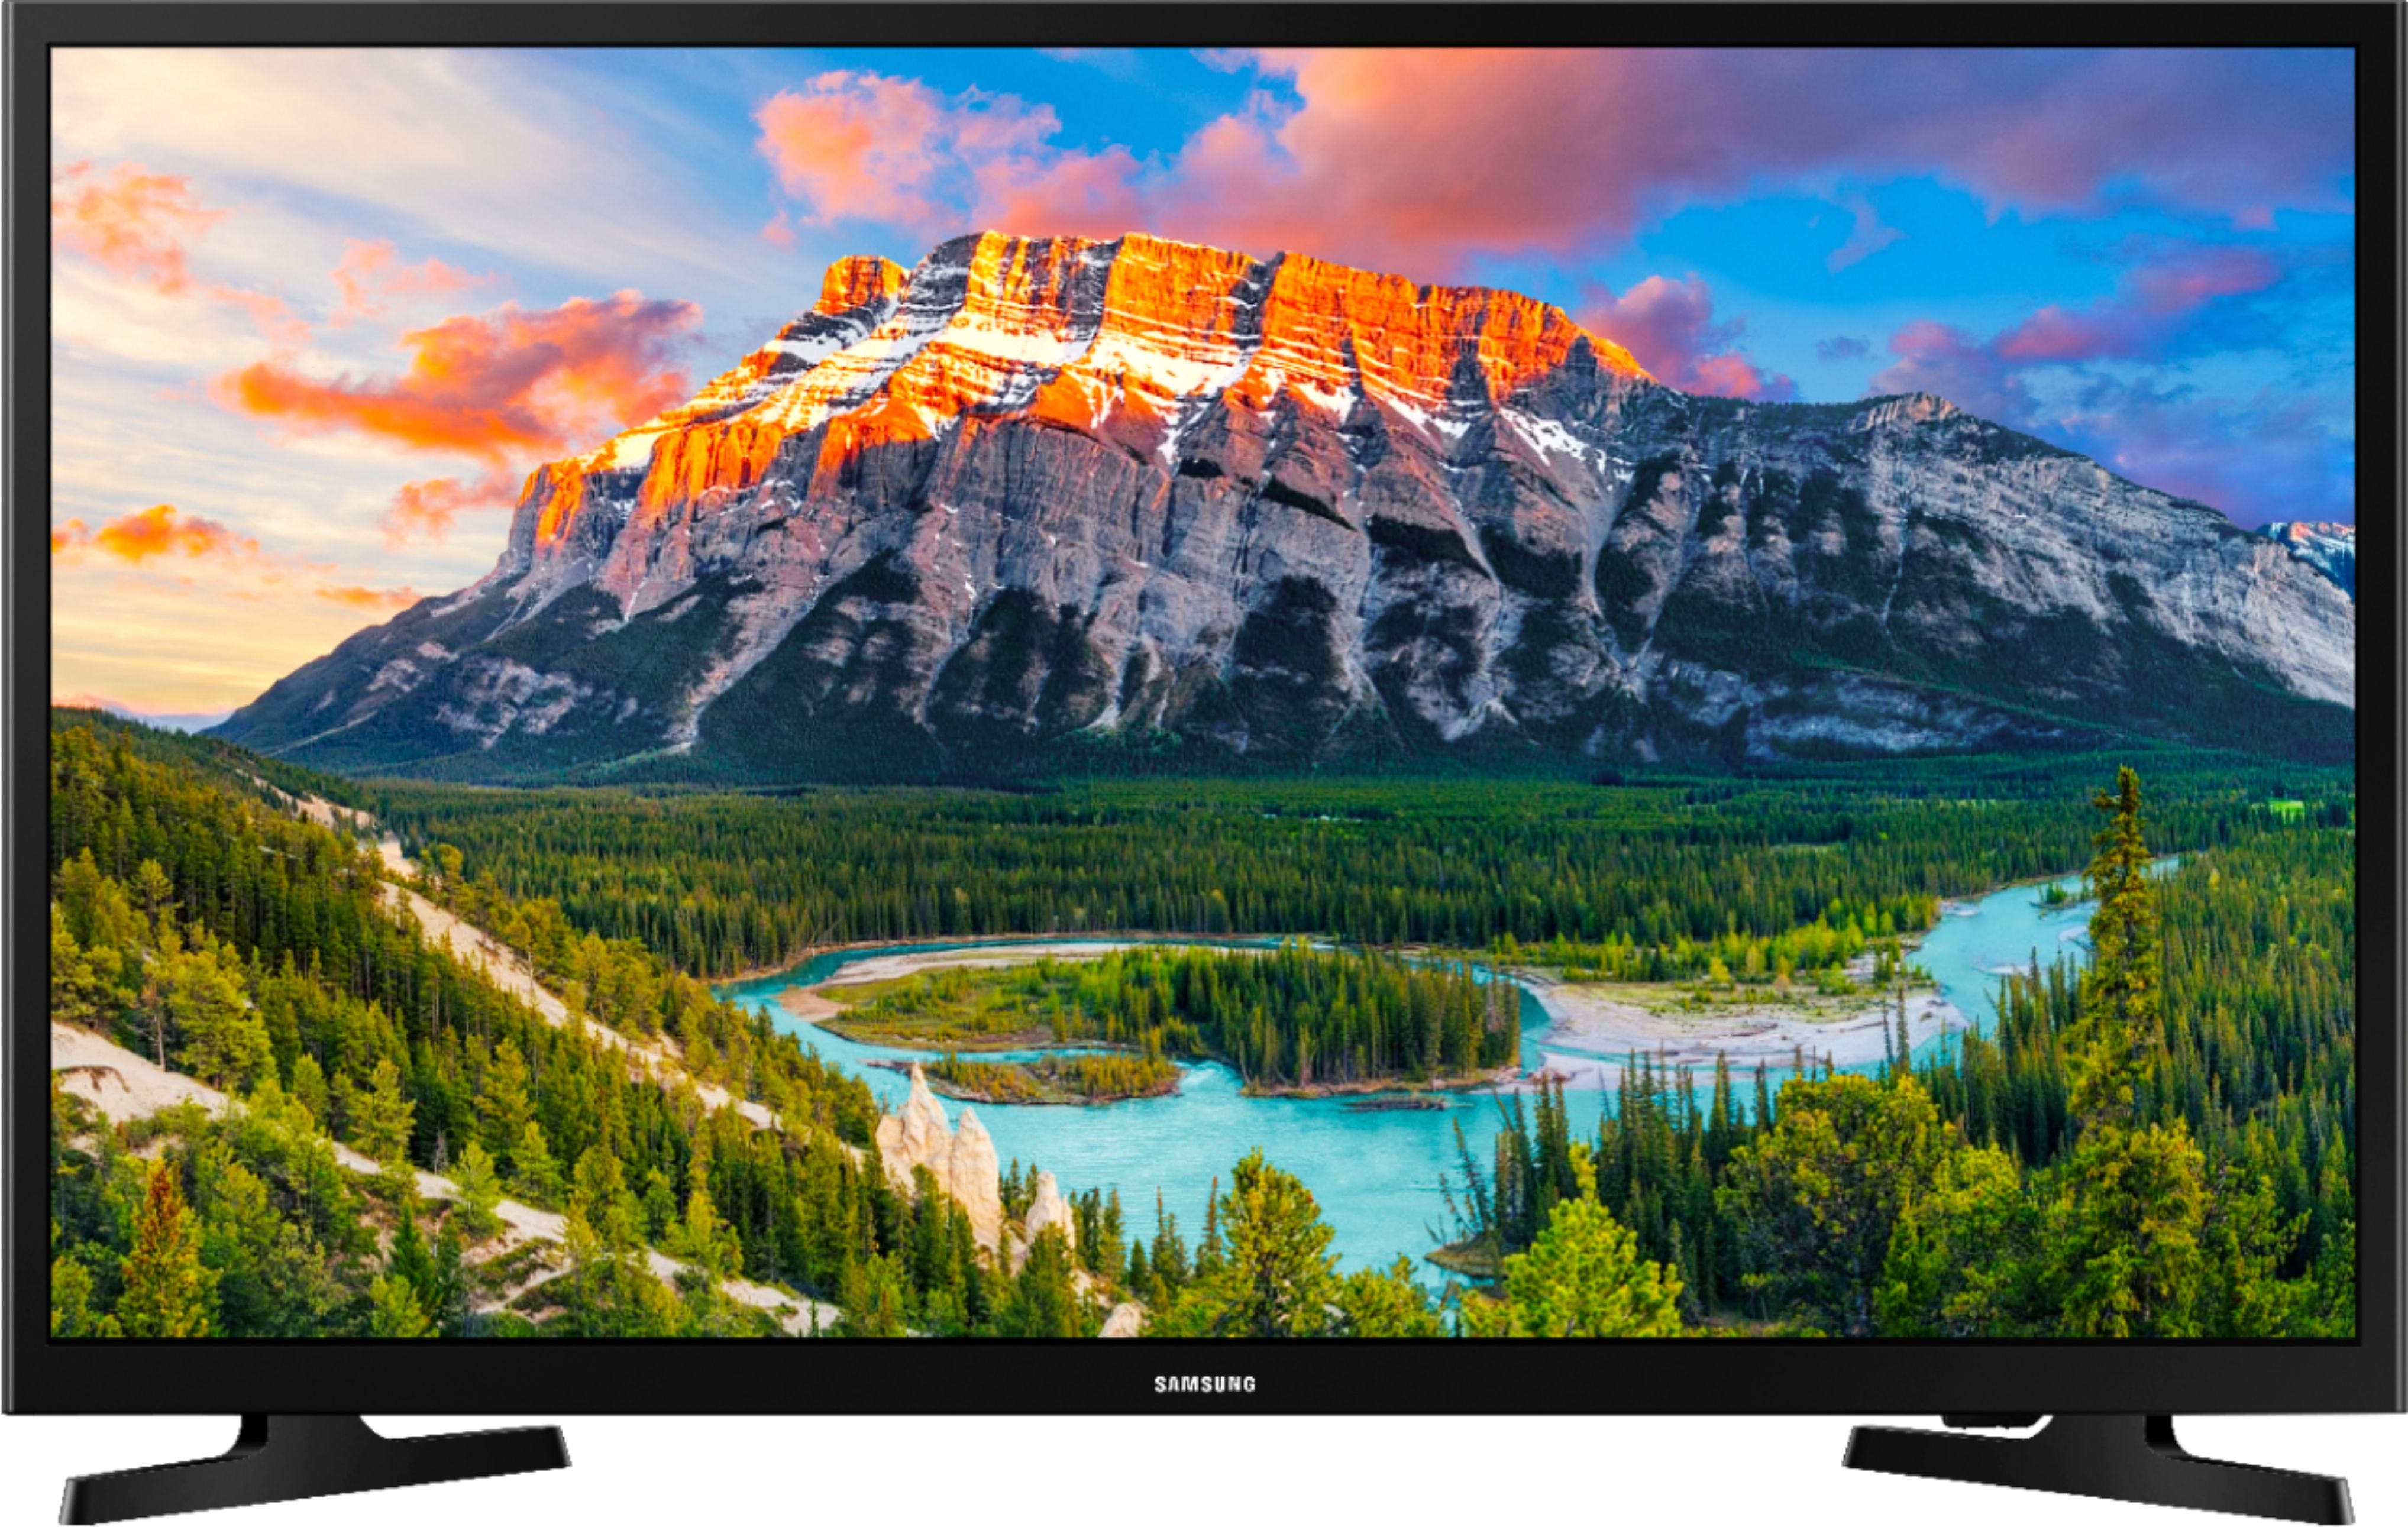 compressie Taiko buik zuur Best Buy: Samsung 43" Class 5 Series LED Full HD Smart Tizen TV  UN43N5300AFXZA